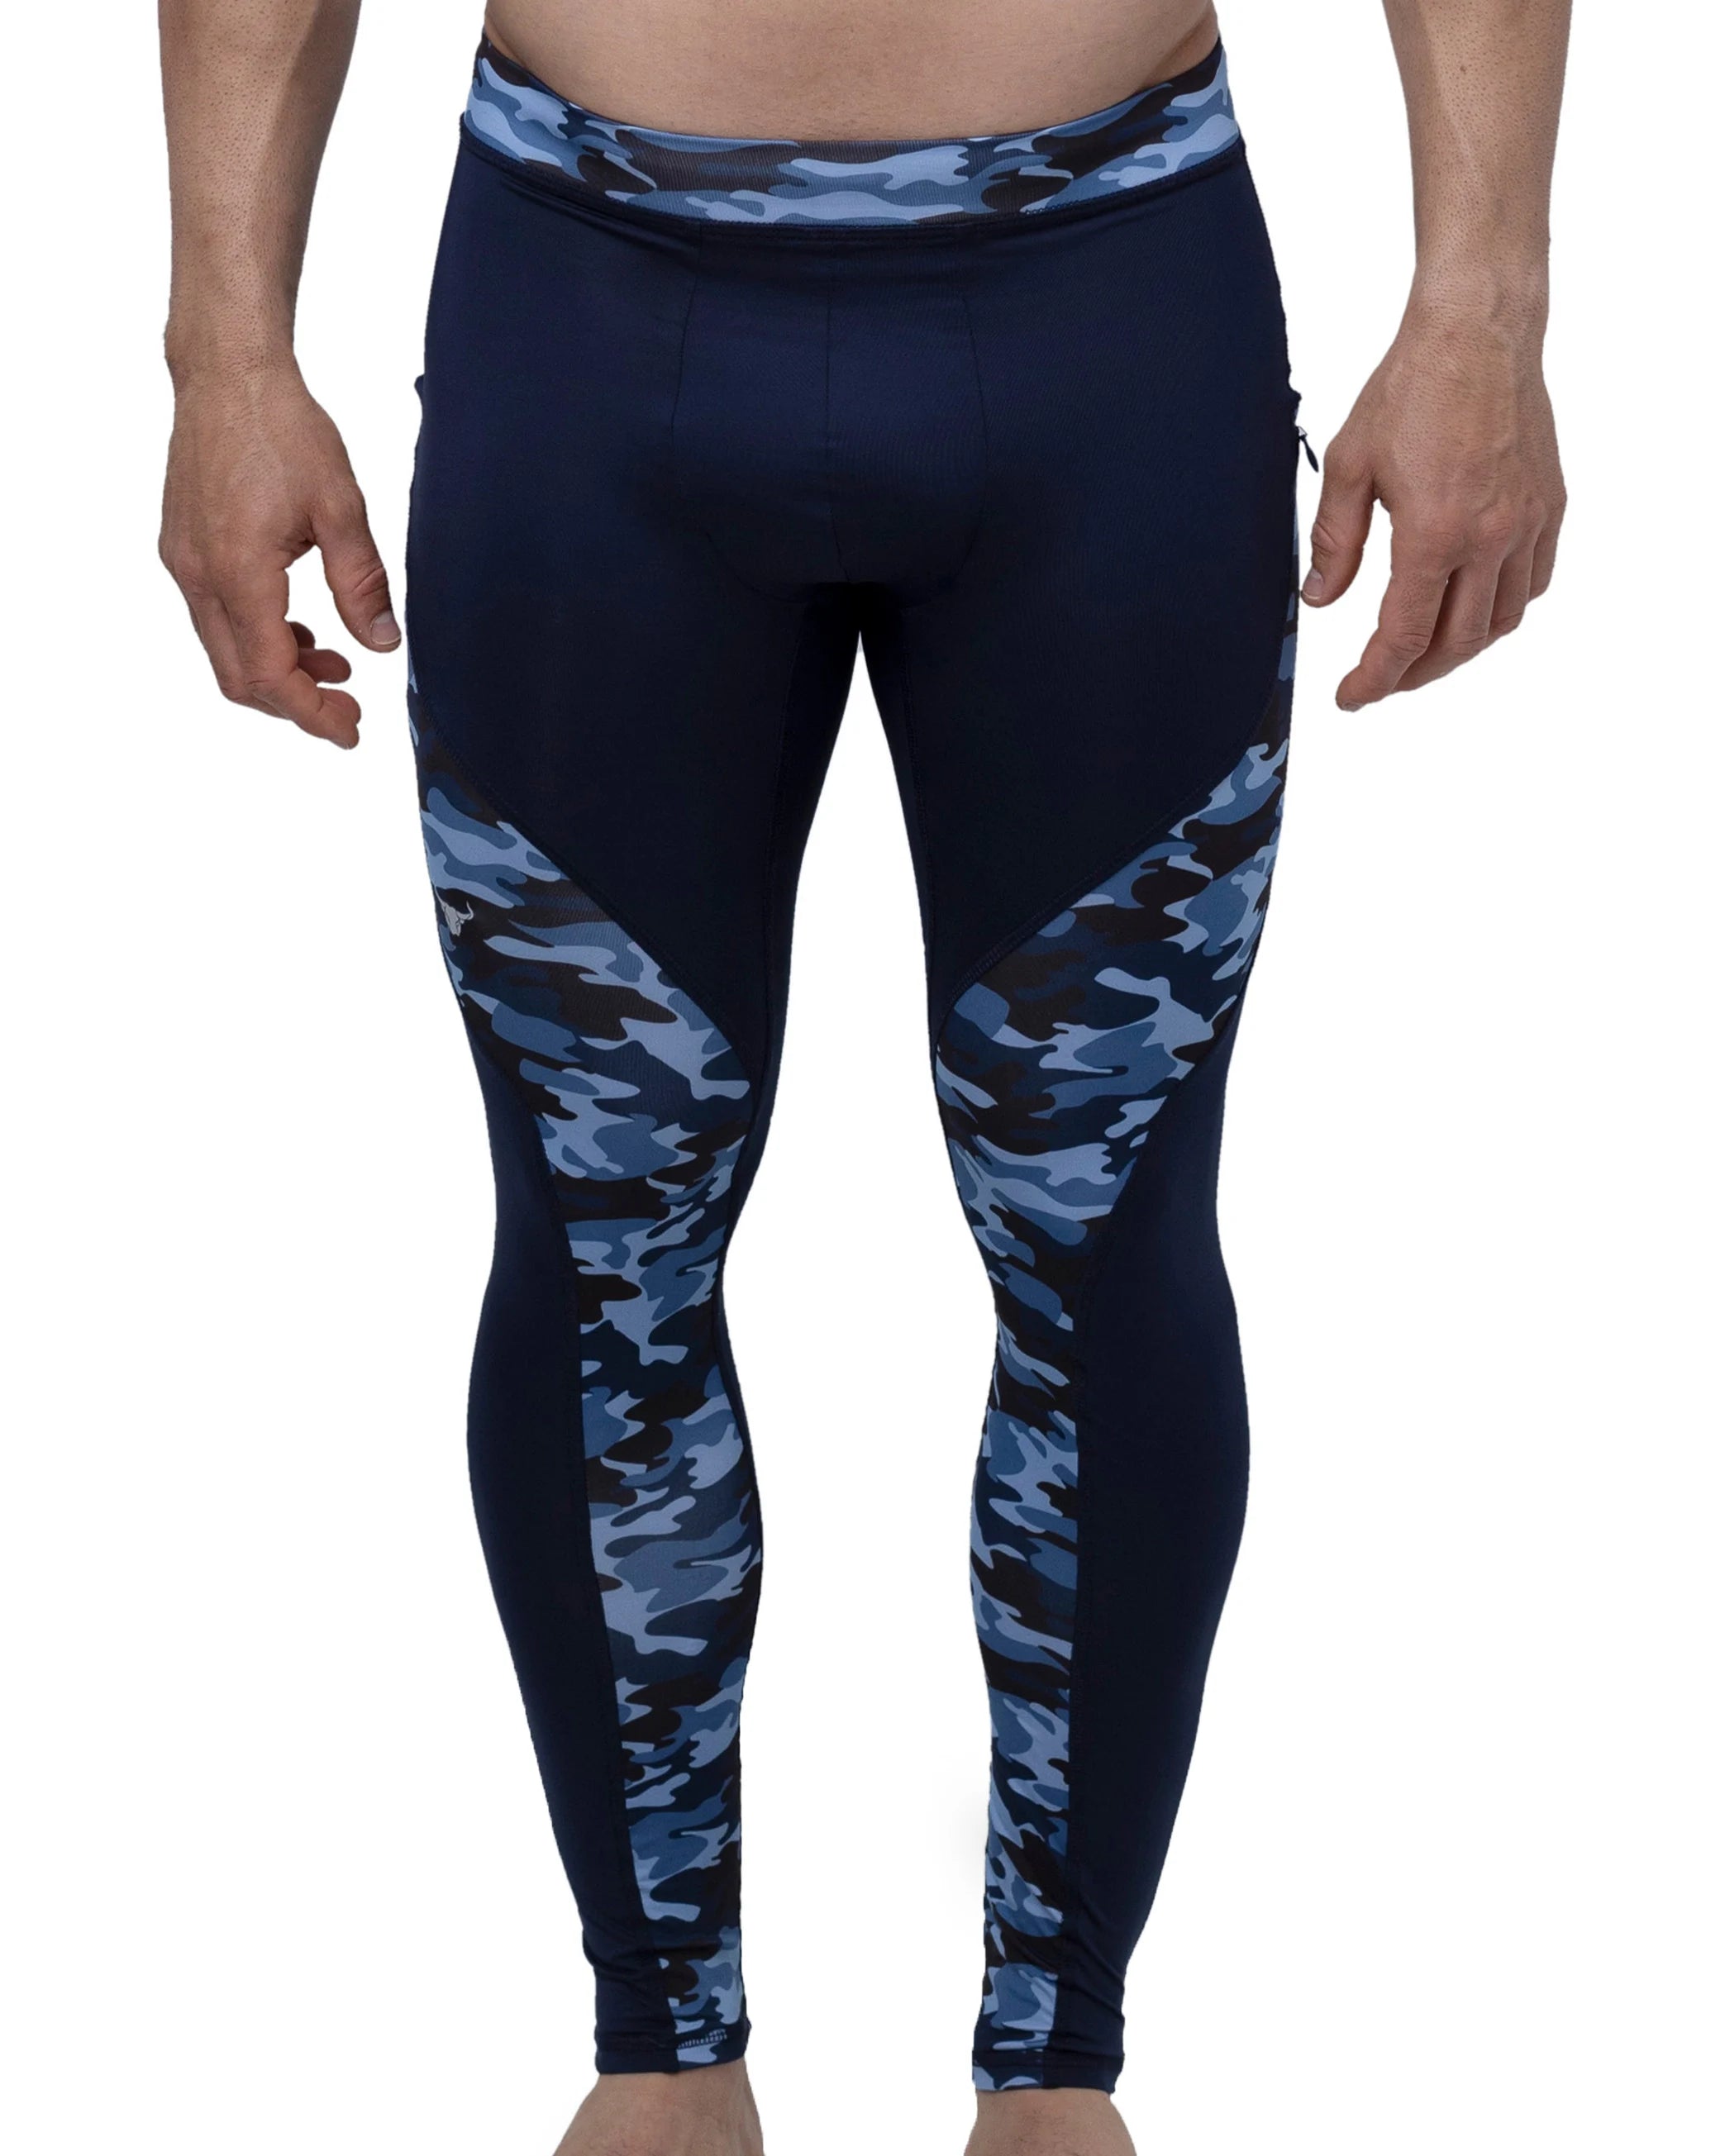 Men Running Tights Light Blue Training Gym Leggings Man Compression Pants  Jogging Mallas Hombre Sportlegging Cycling